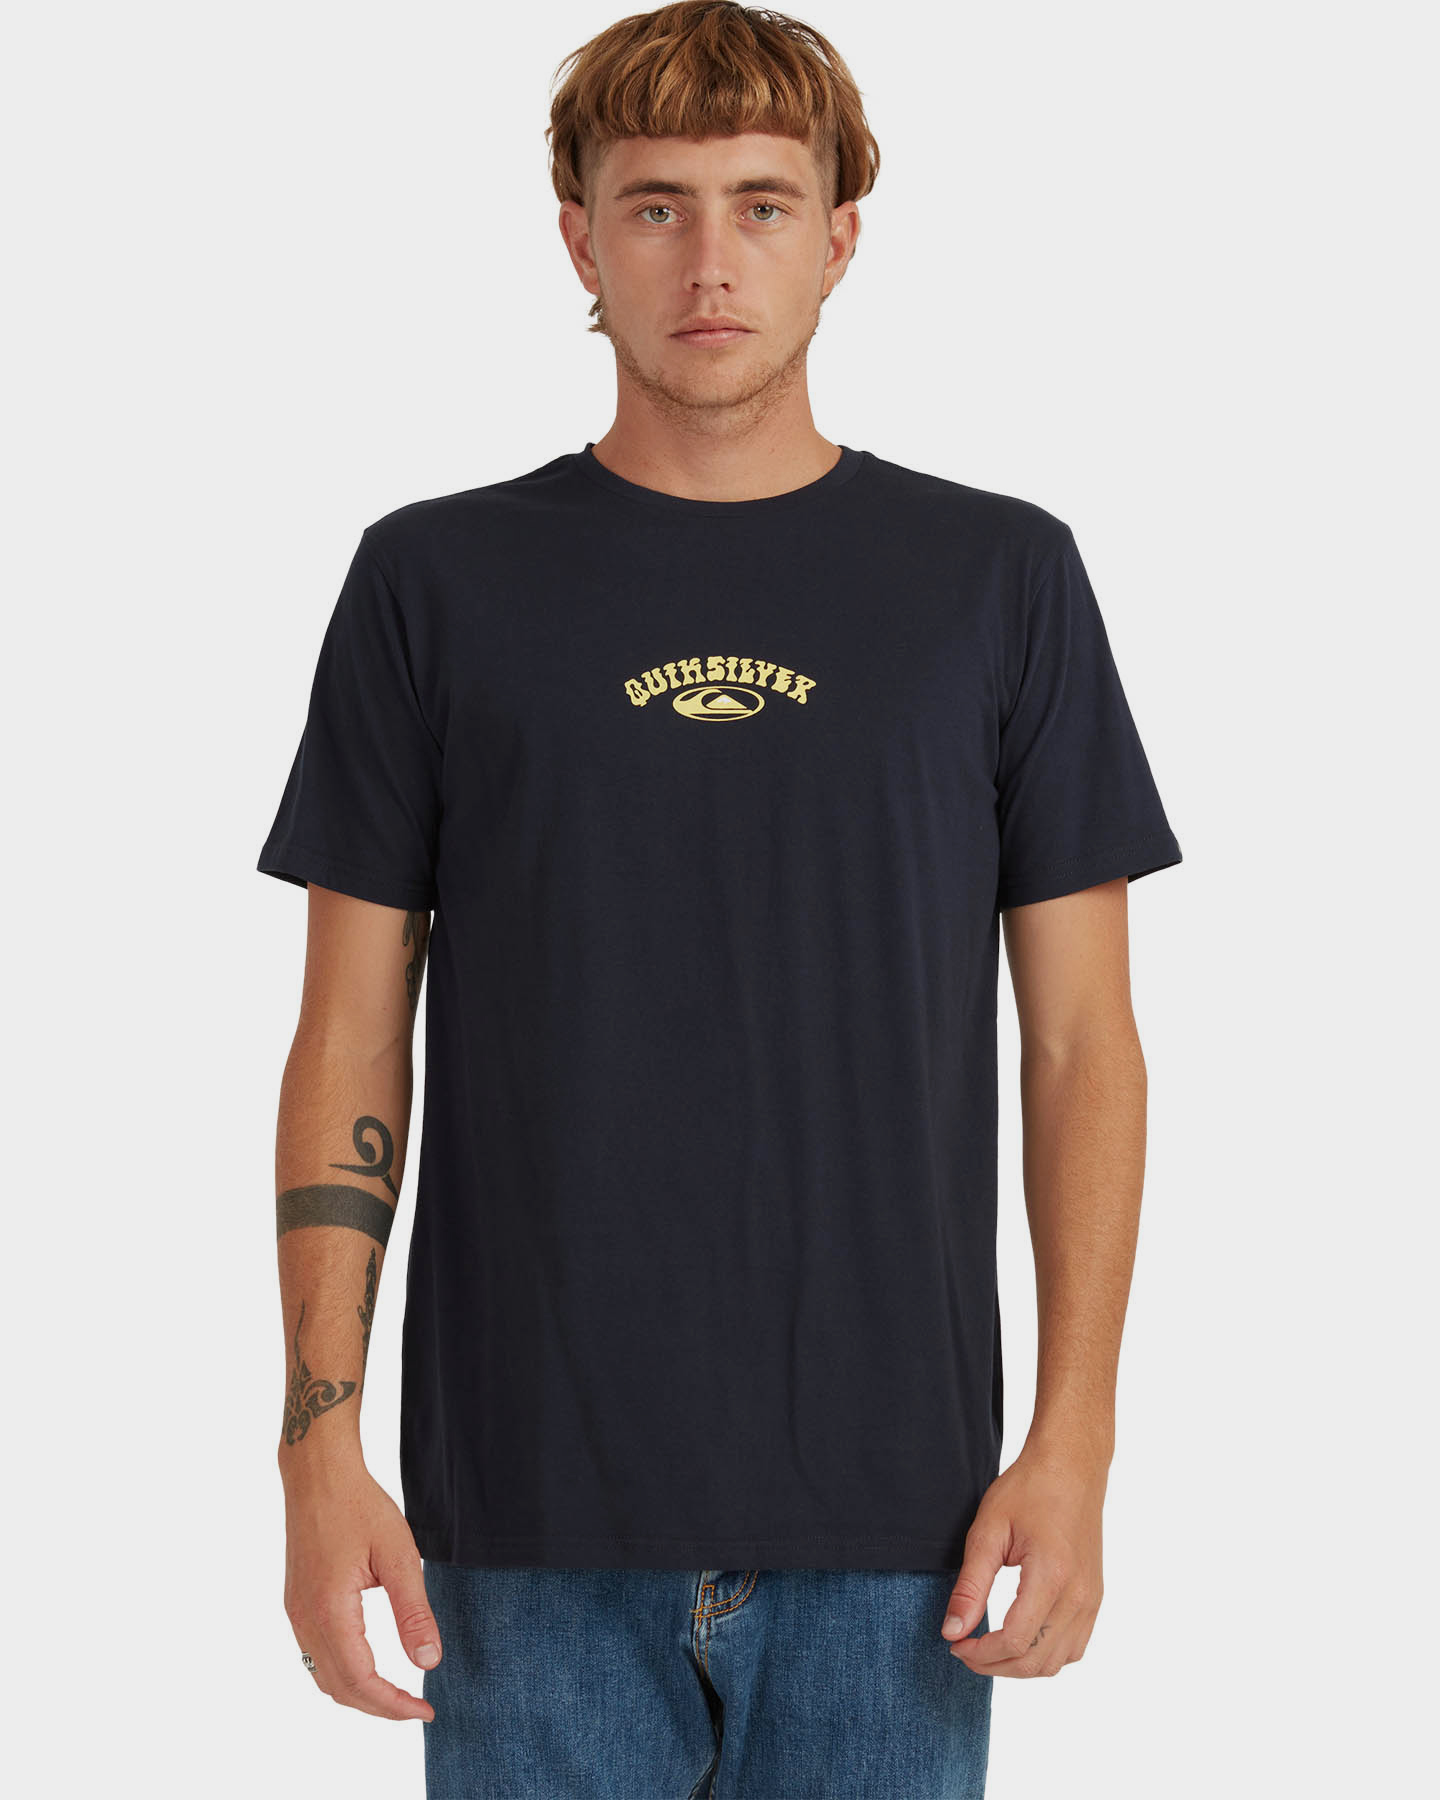 Quiksilver Mens Short Sleeve Graphic T-Shirt Tee